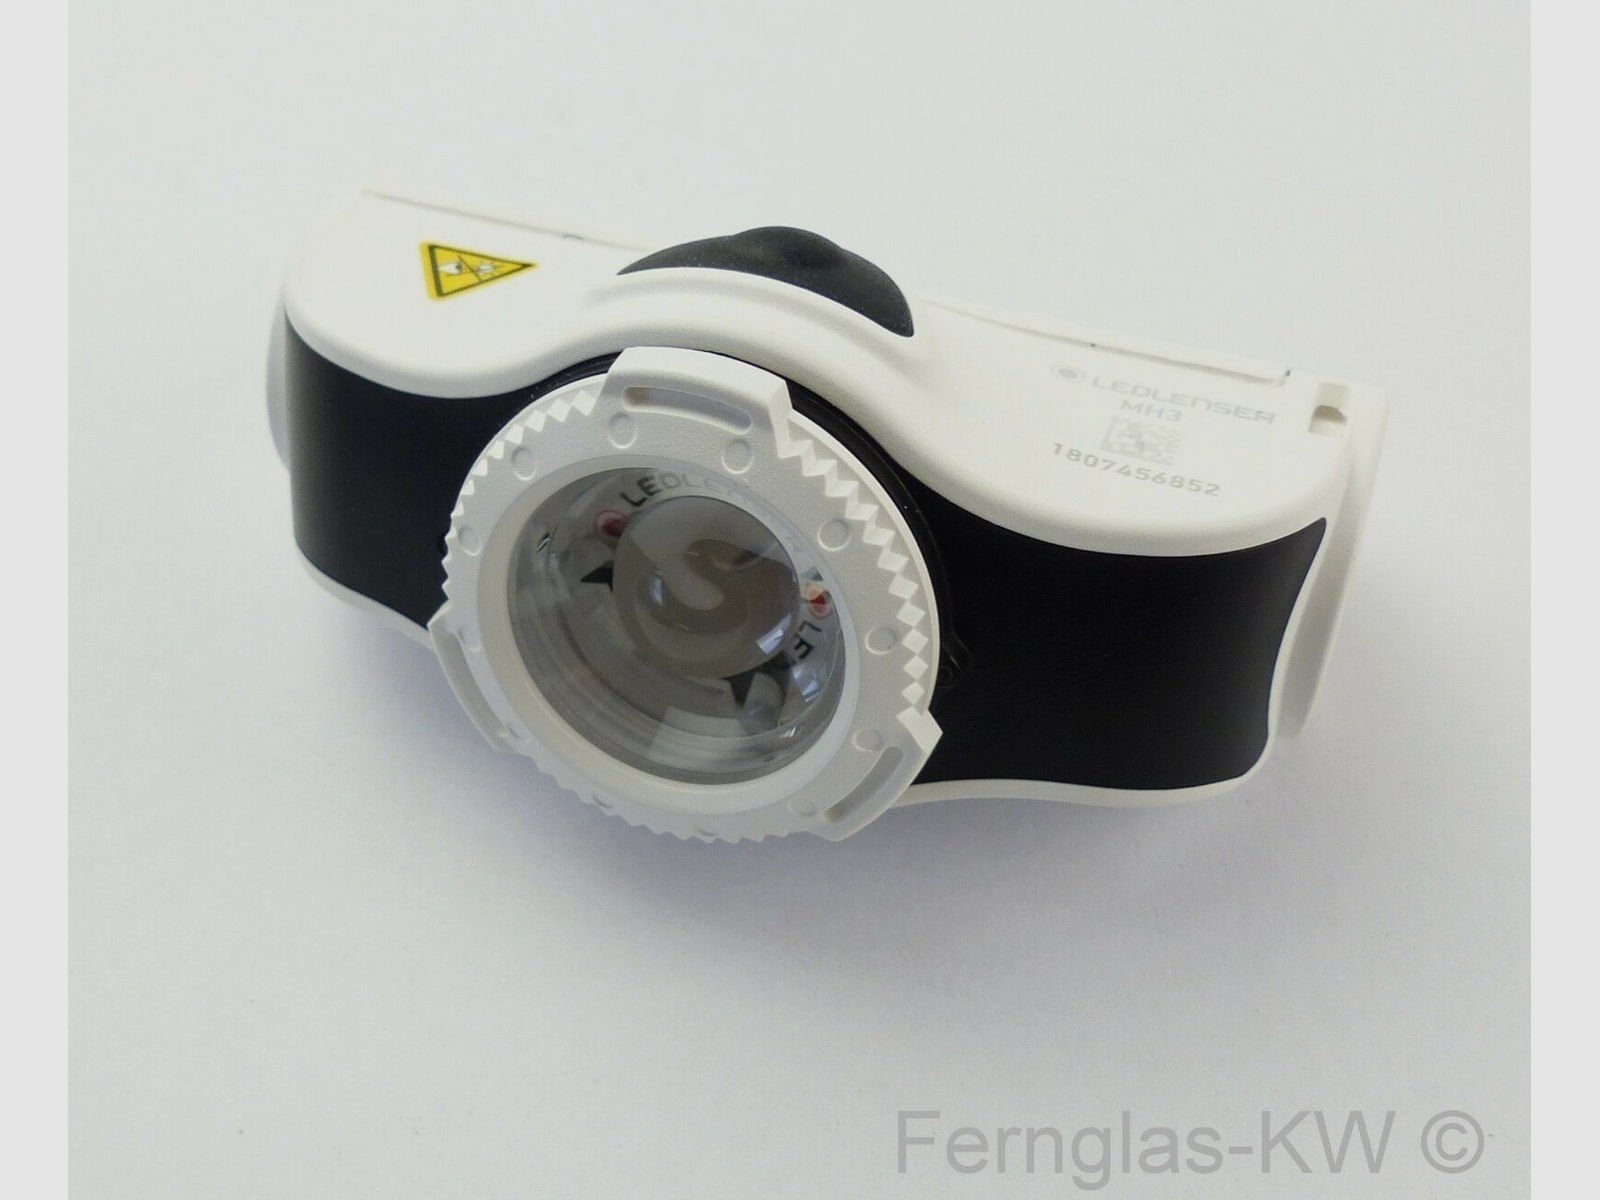 Ledlenser 500948 LED Kopflampe Stirnlampe MH3 Schwarz Weiß Leuchtkraft 200 Lumen